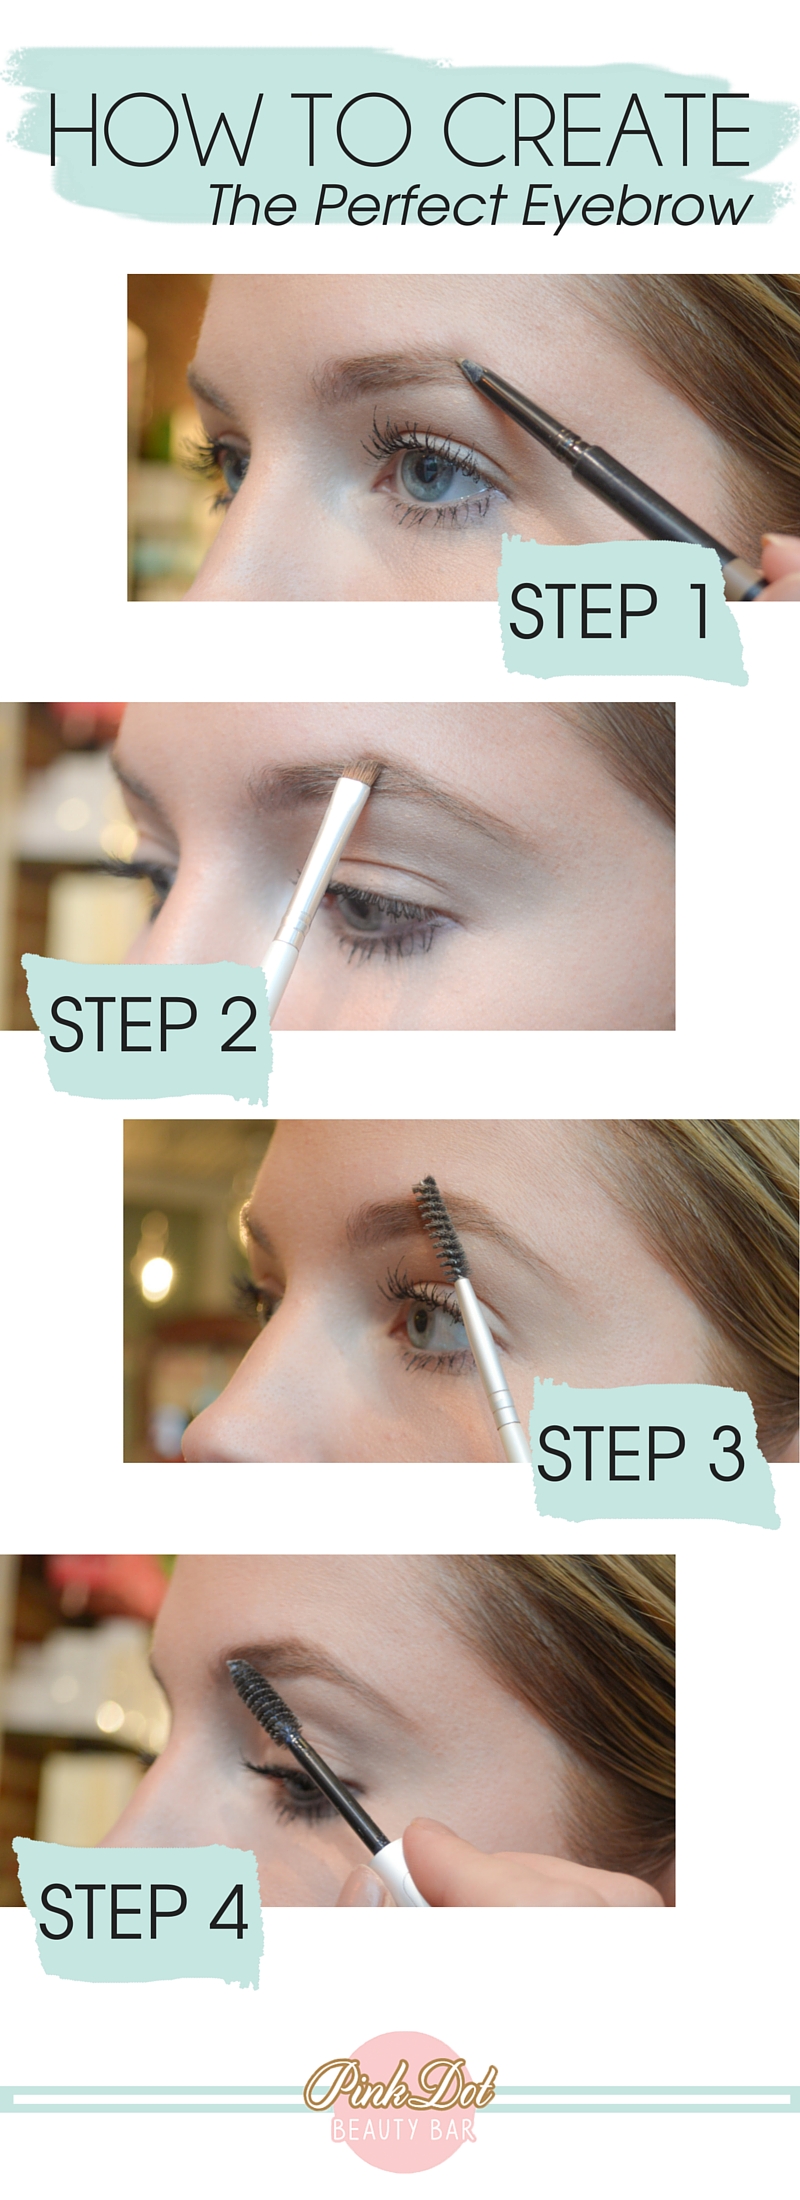 How to create the perfect eyebrow - step by step via @pinkdotbeauty